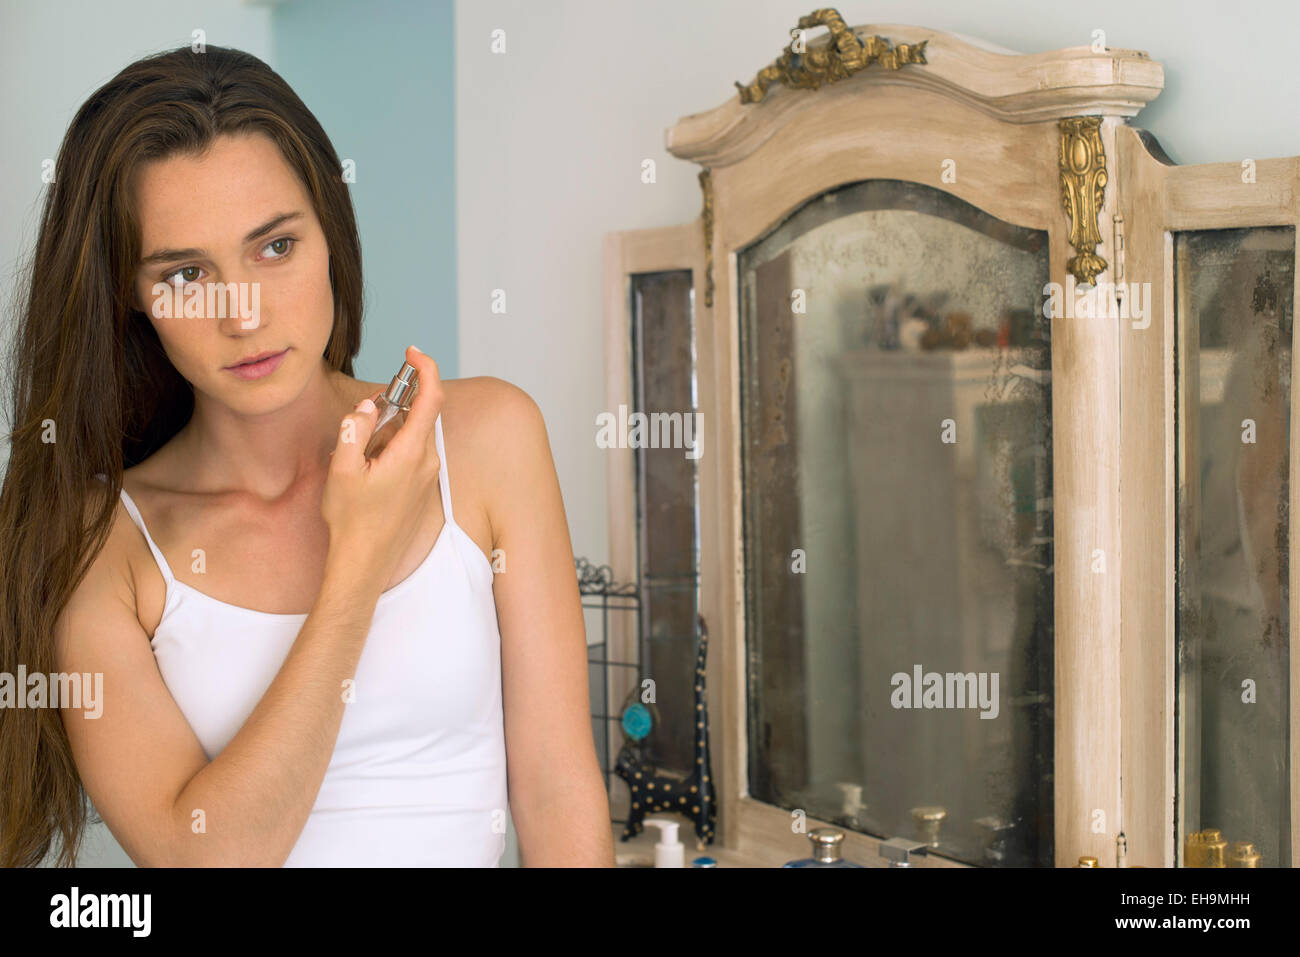 Woman putting on perfume Stock Photo